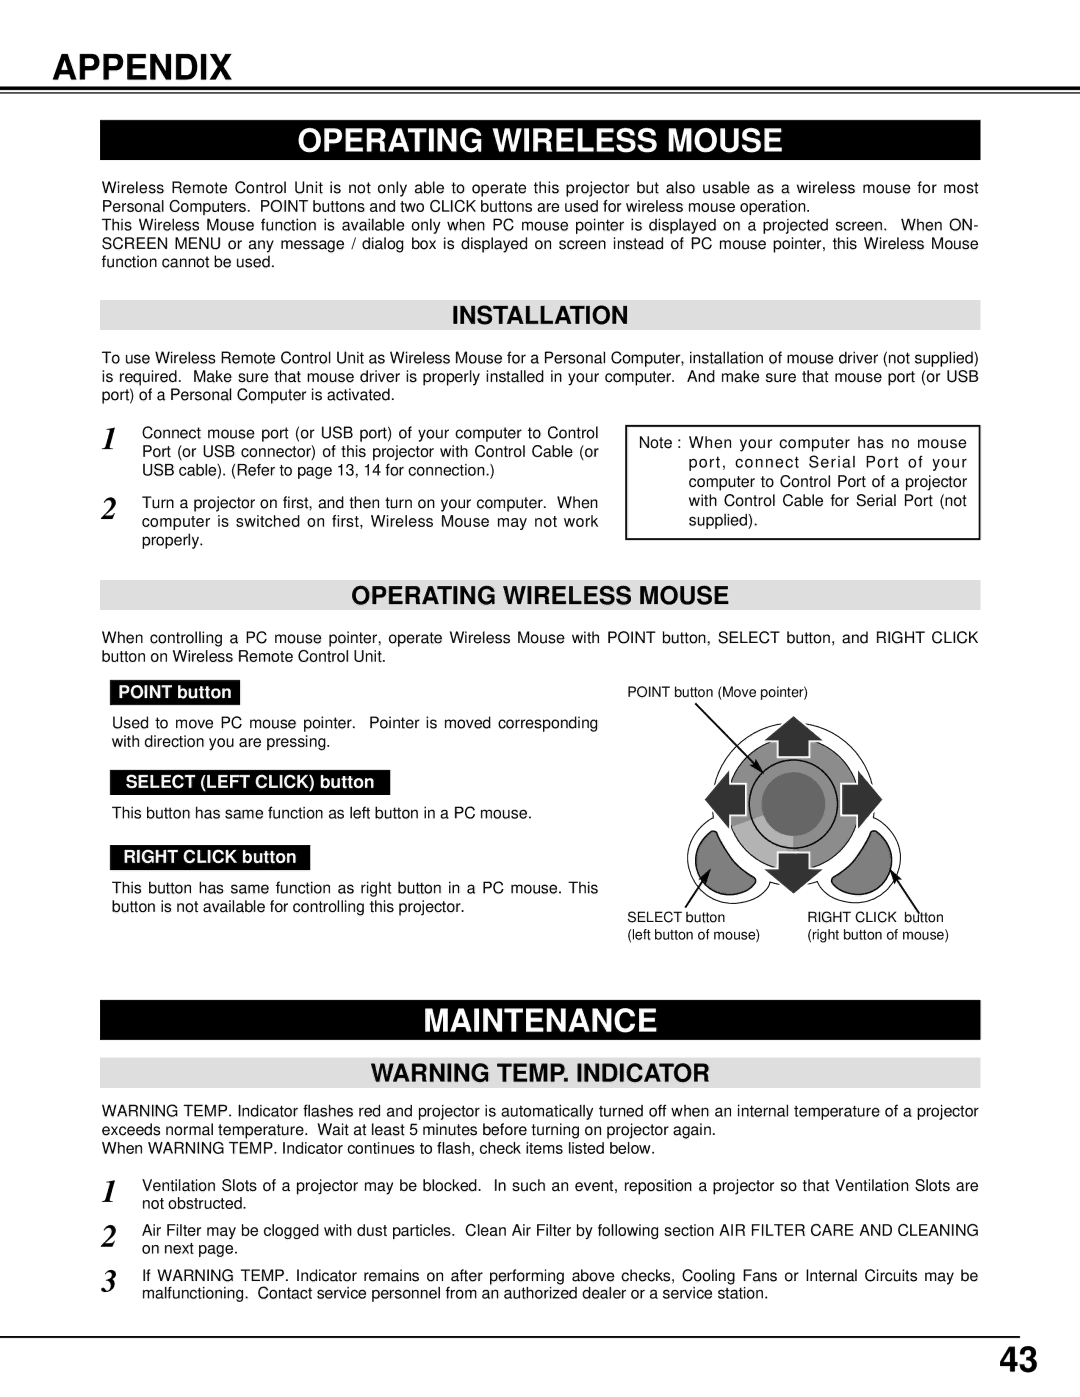 Eiki LC-XT3 instruction manual Appendix, Operating Wireless Mouse, Maintenance, Installation 